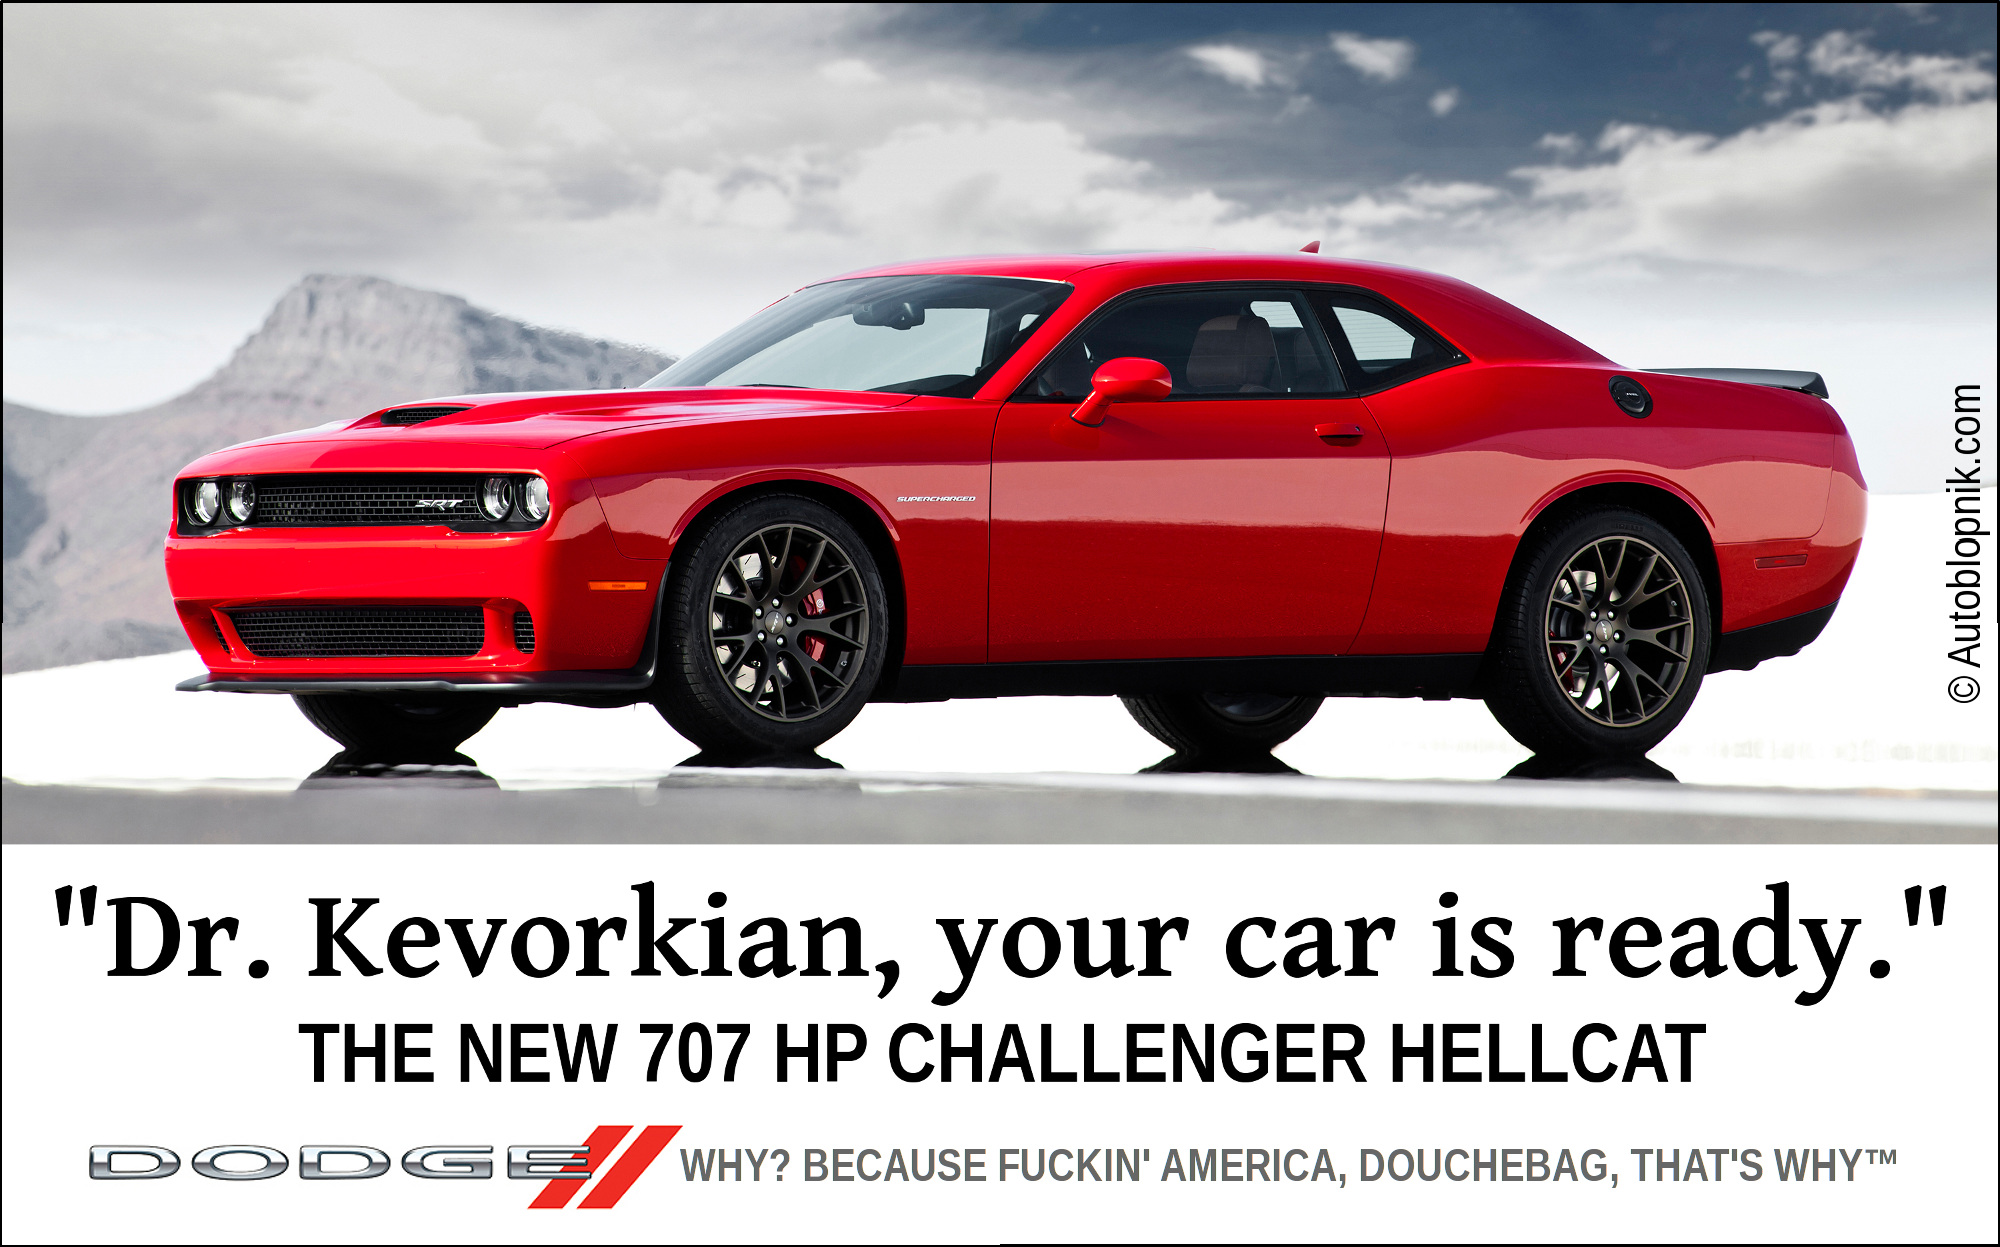 Dodge Challenger Hellcat ad, yesterday